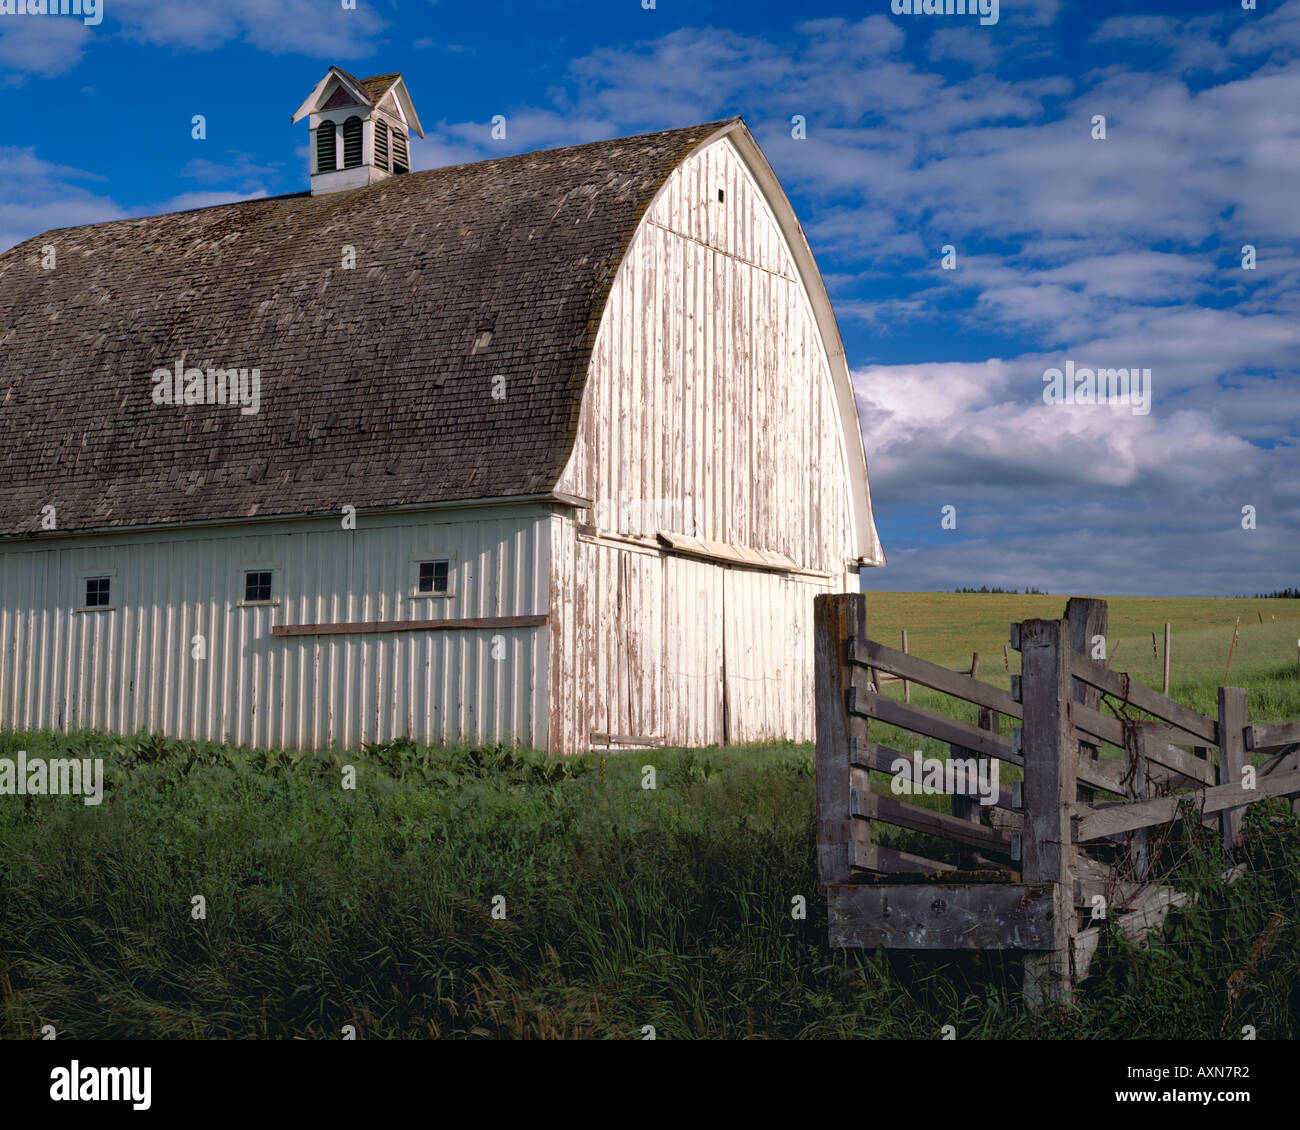 Weathered round roofed white barn with adjacent wooden cattle chute near Potlatch, Idaho Stock Photo